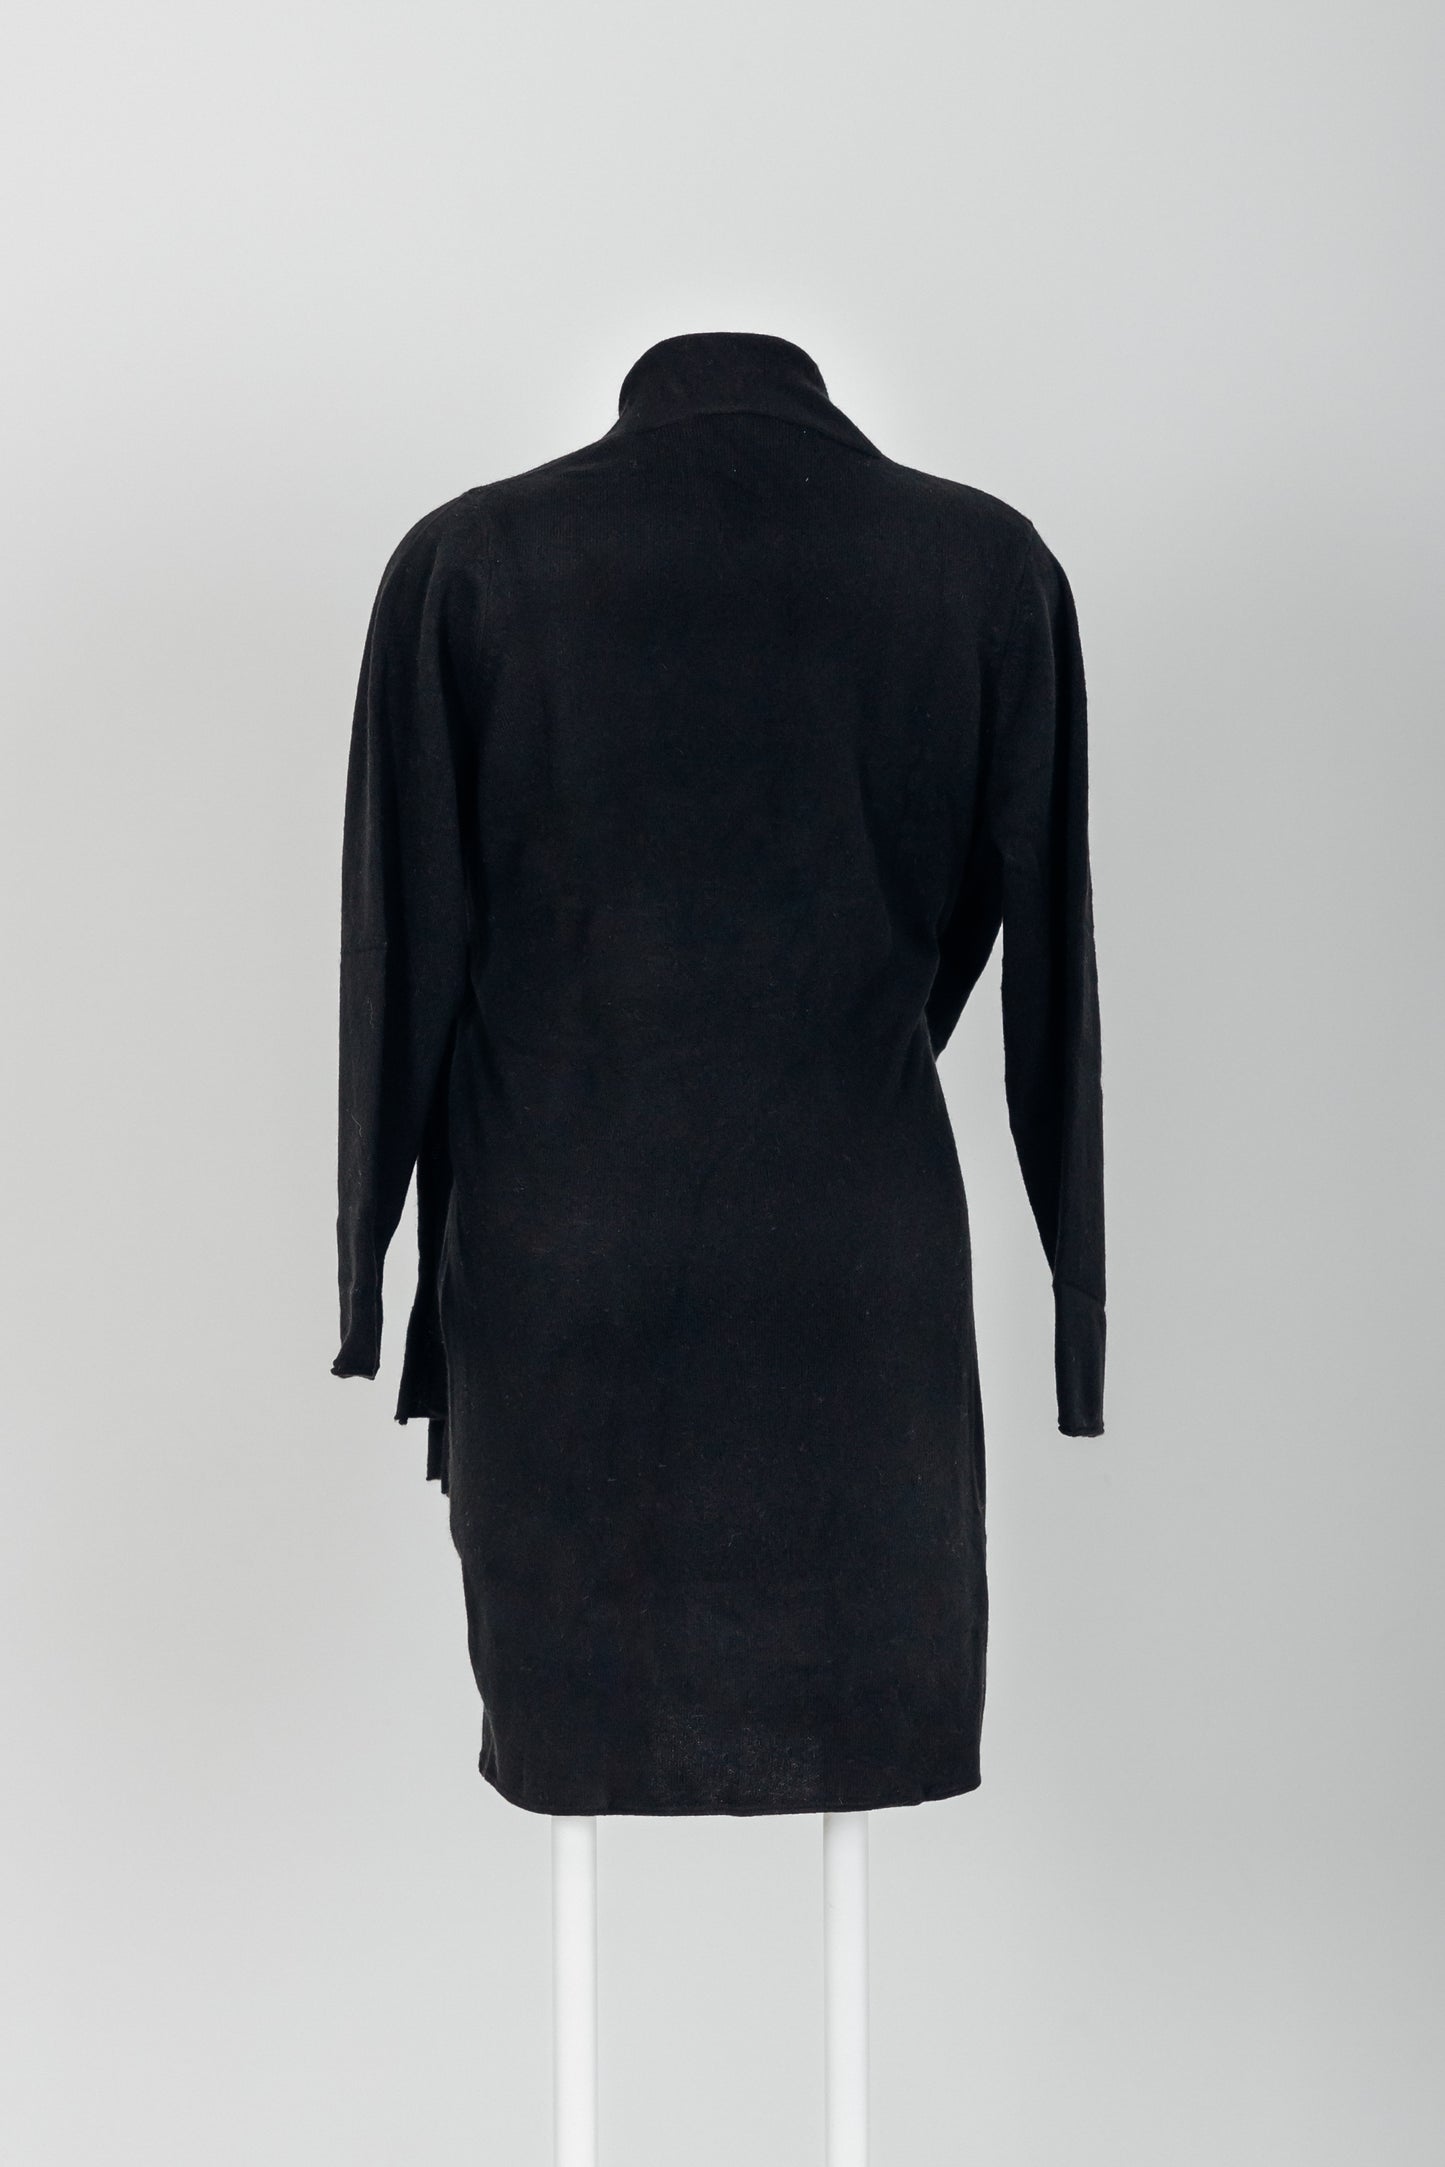 Cou Cou Maternity - Kokoon aus 100% Cashmere in Elegant Black